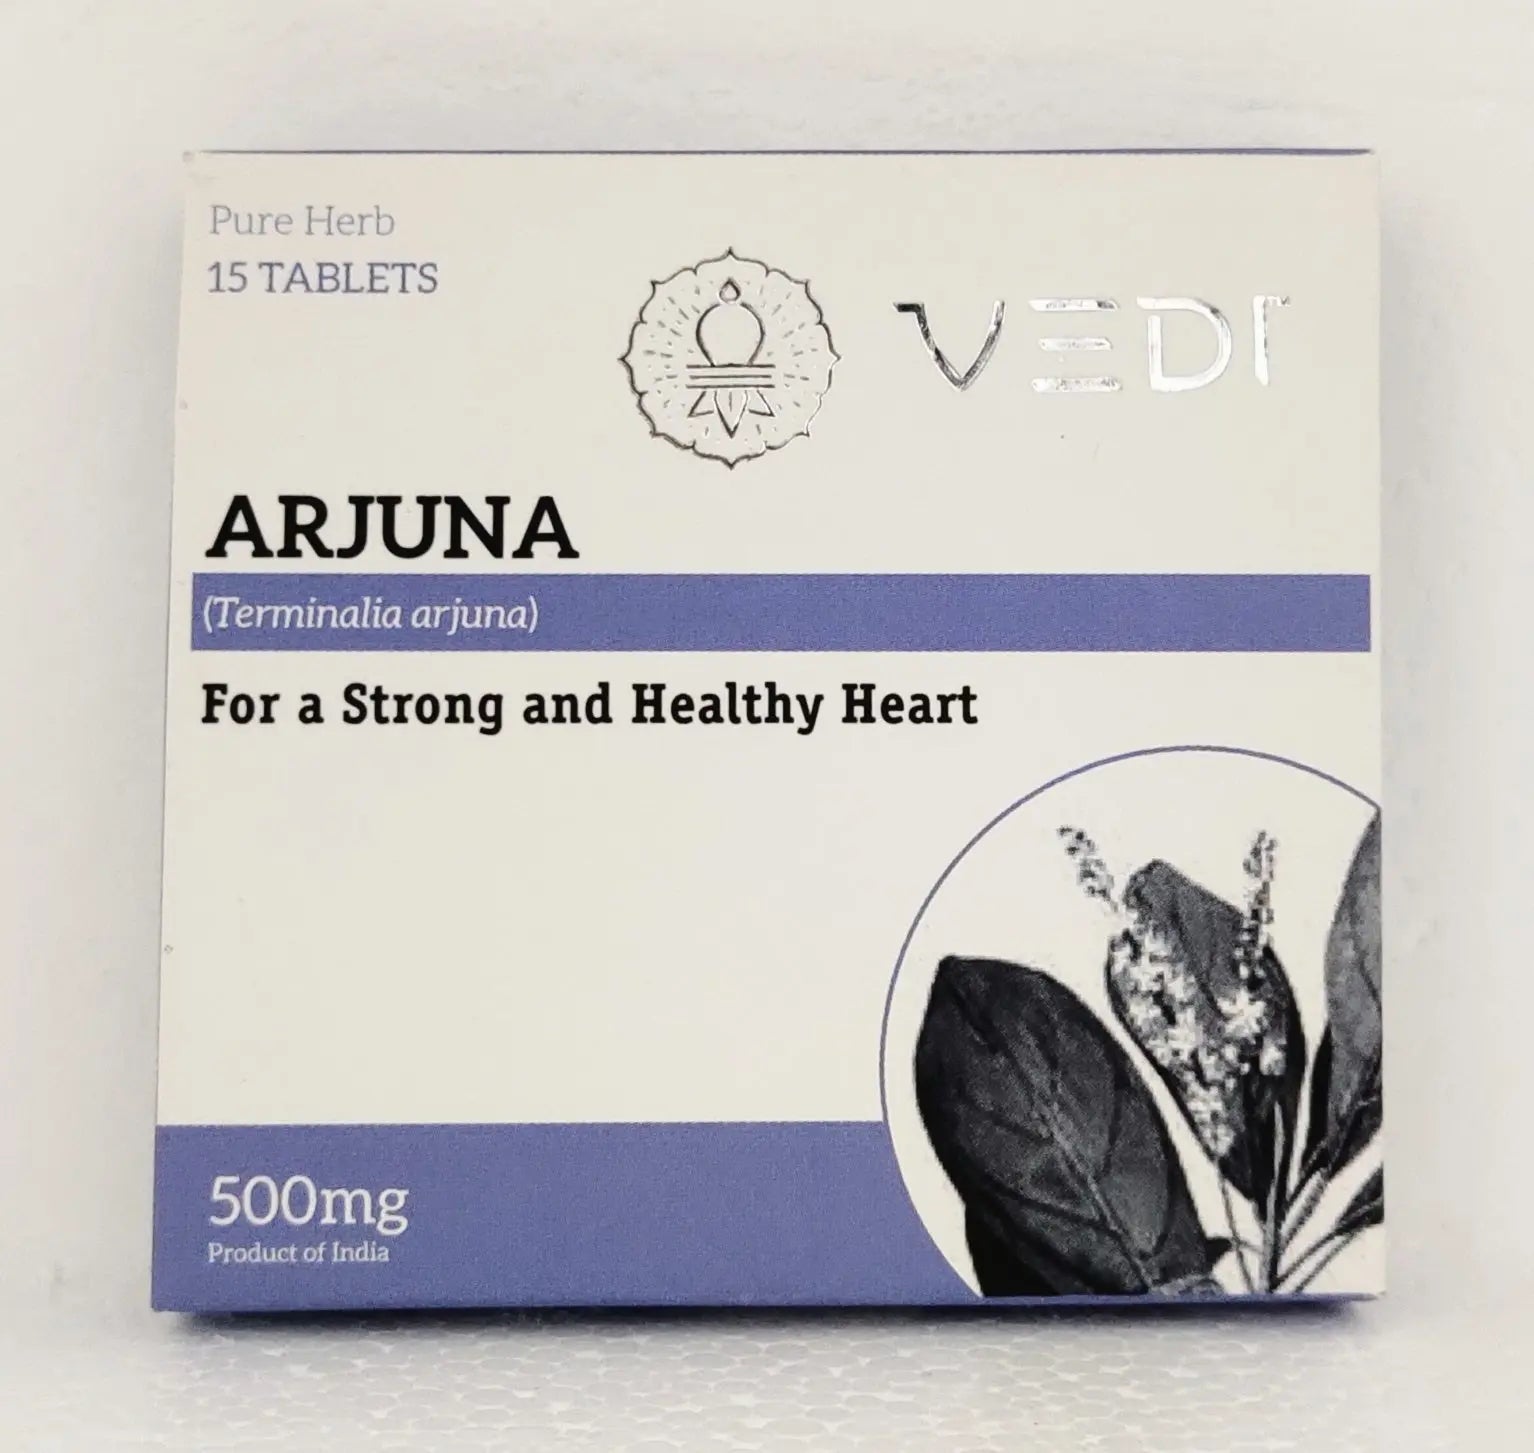 Arjuna tablets - 15tablets Vedi Herbals